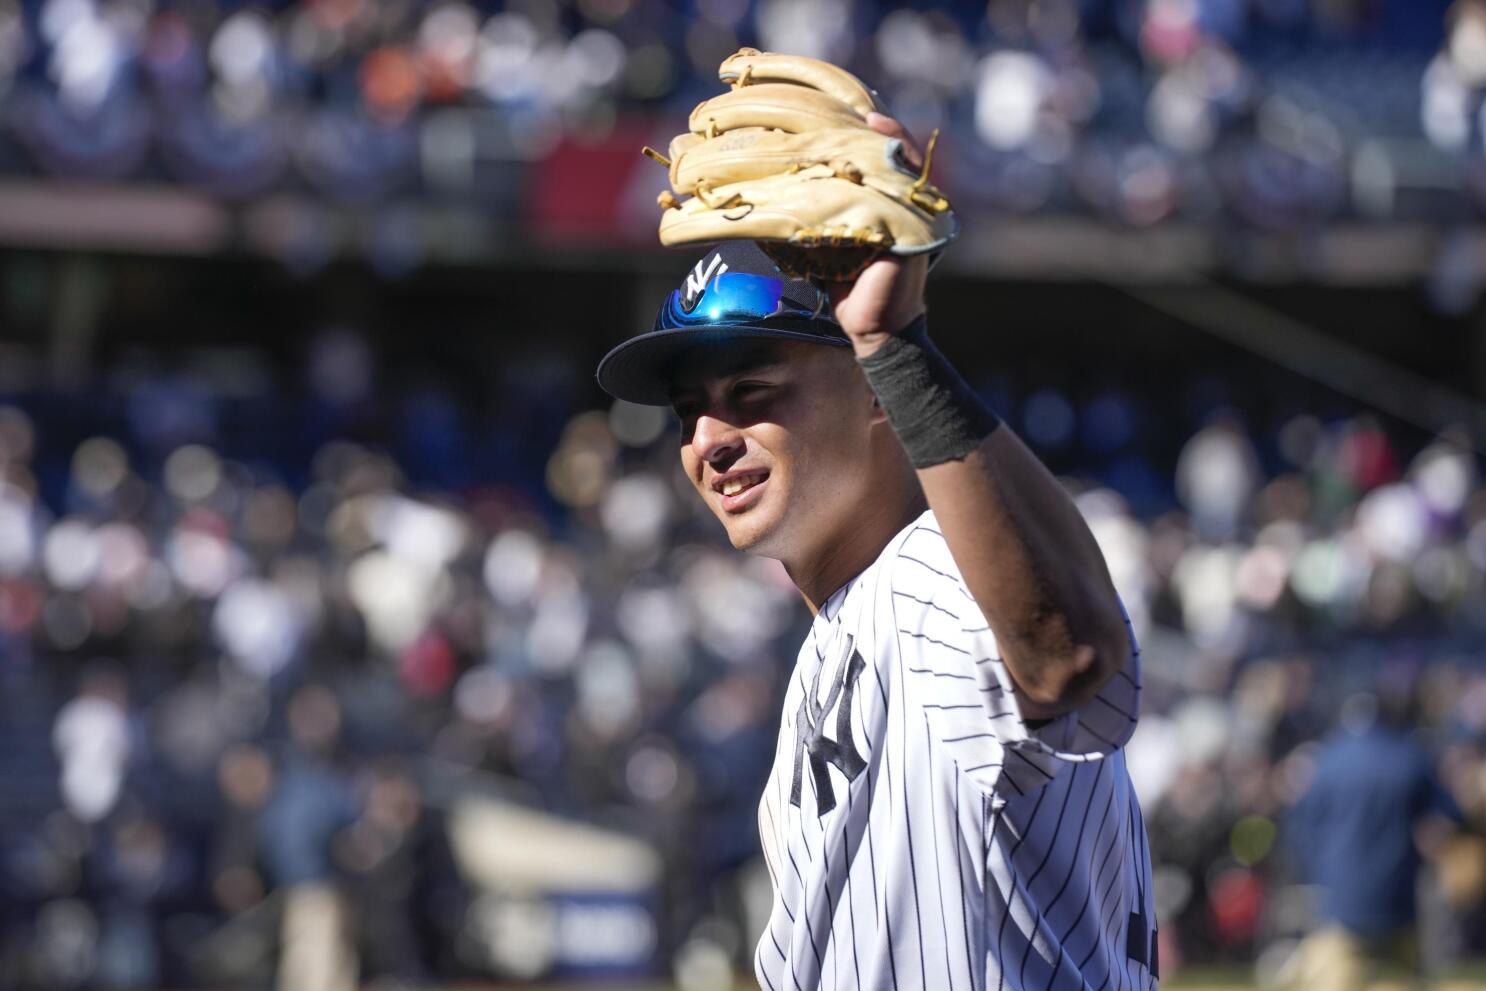 PHOTO GALLERY: Yankees outfielder Brett Gardner visits MUSC